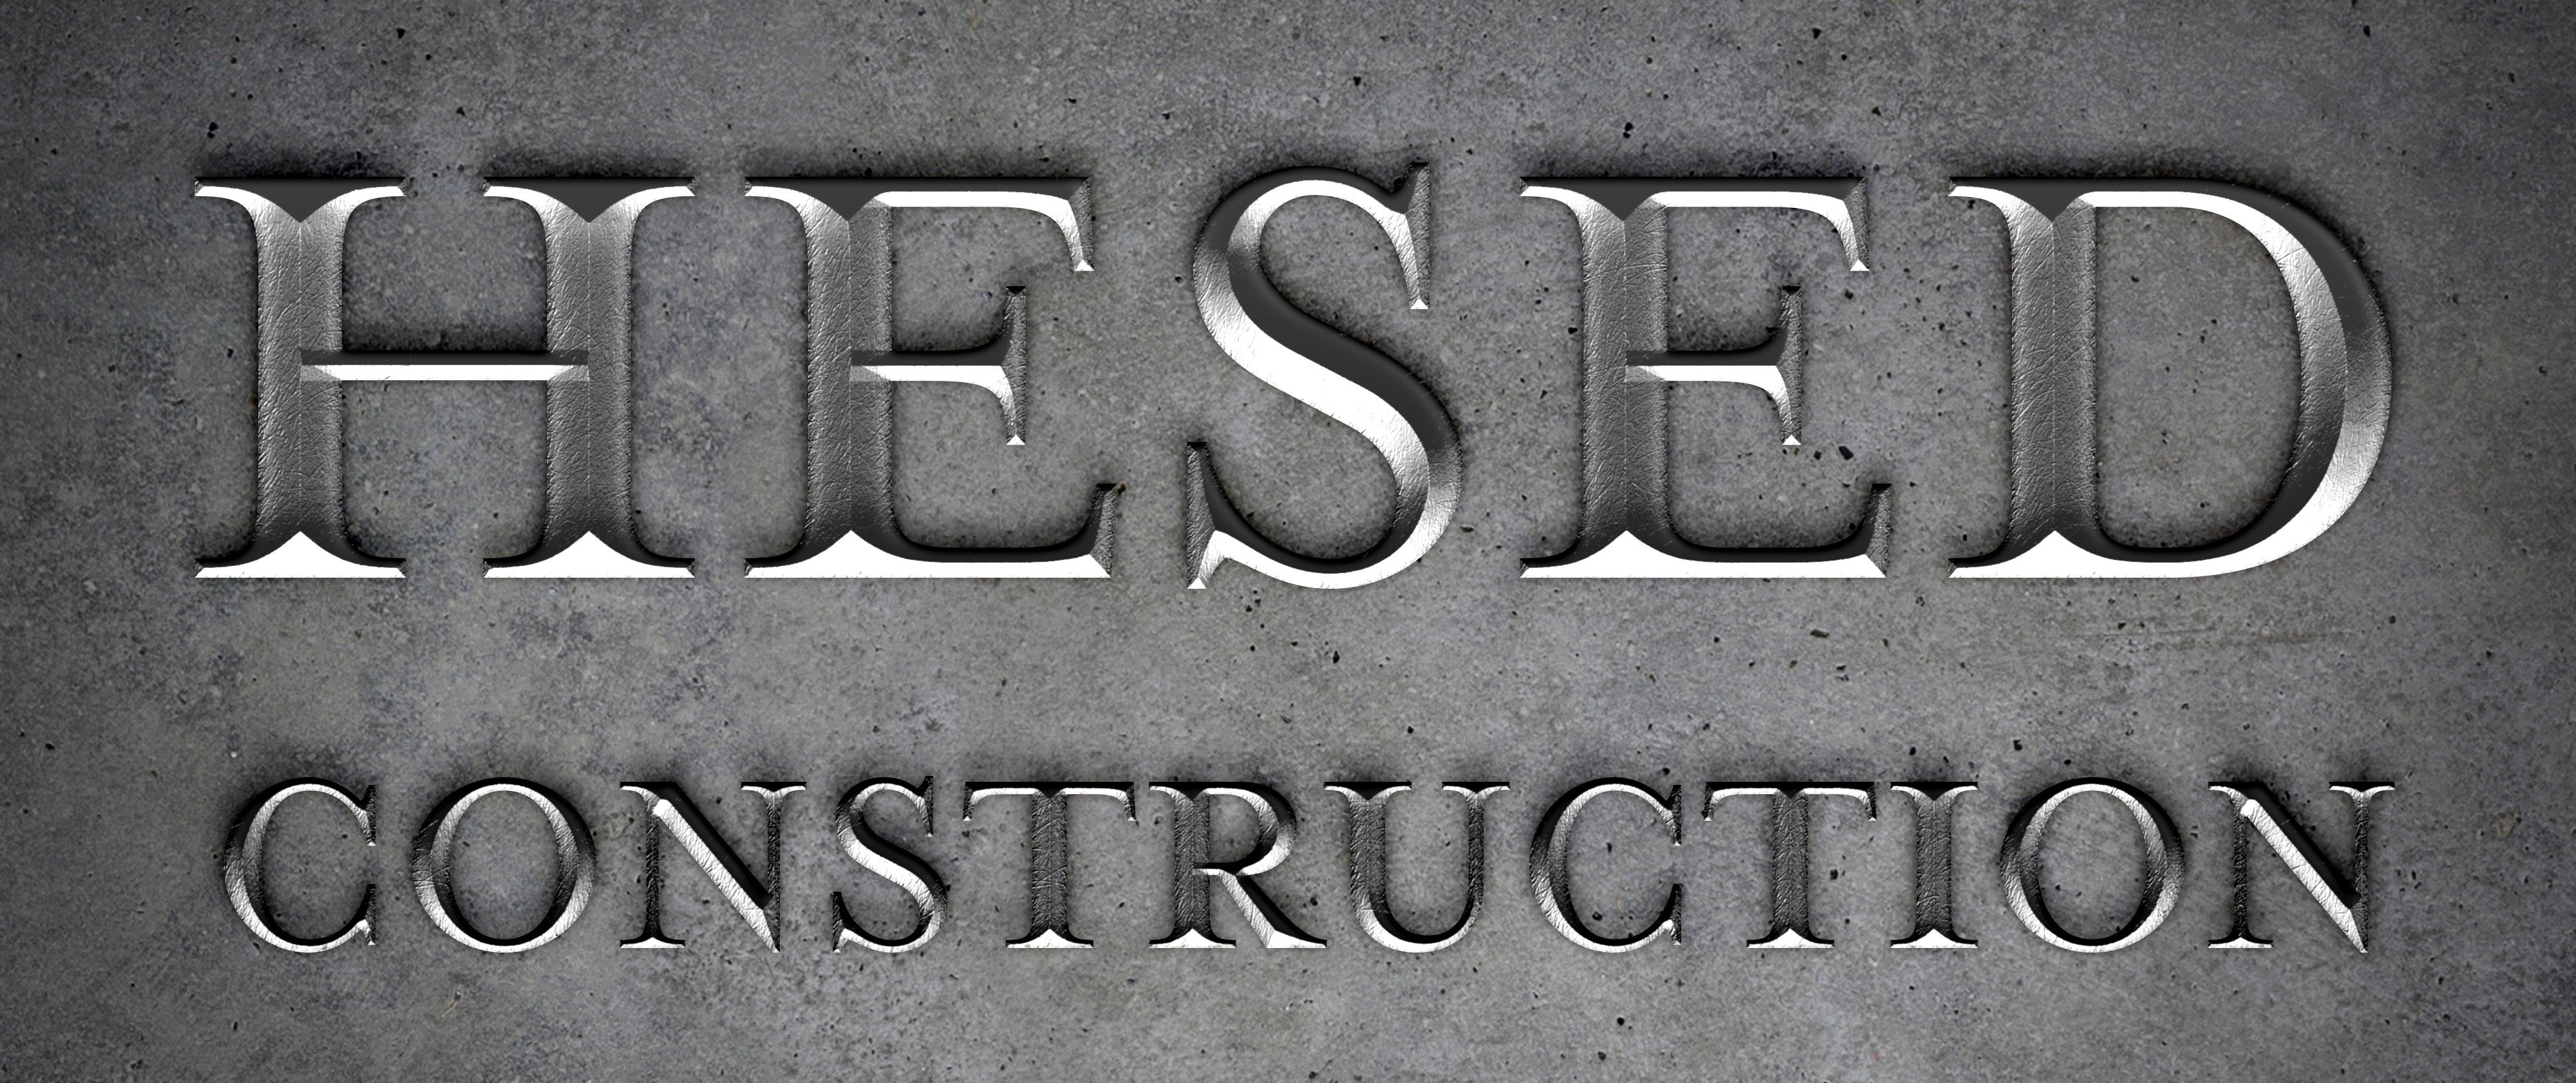 Hesed Constructions Logo